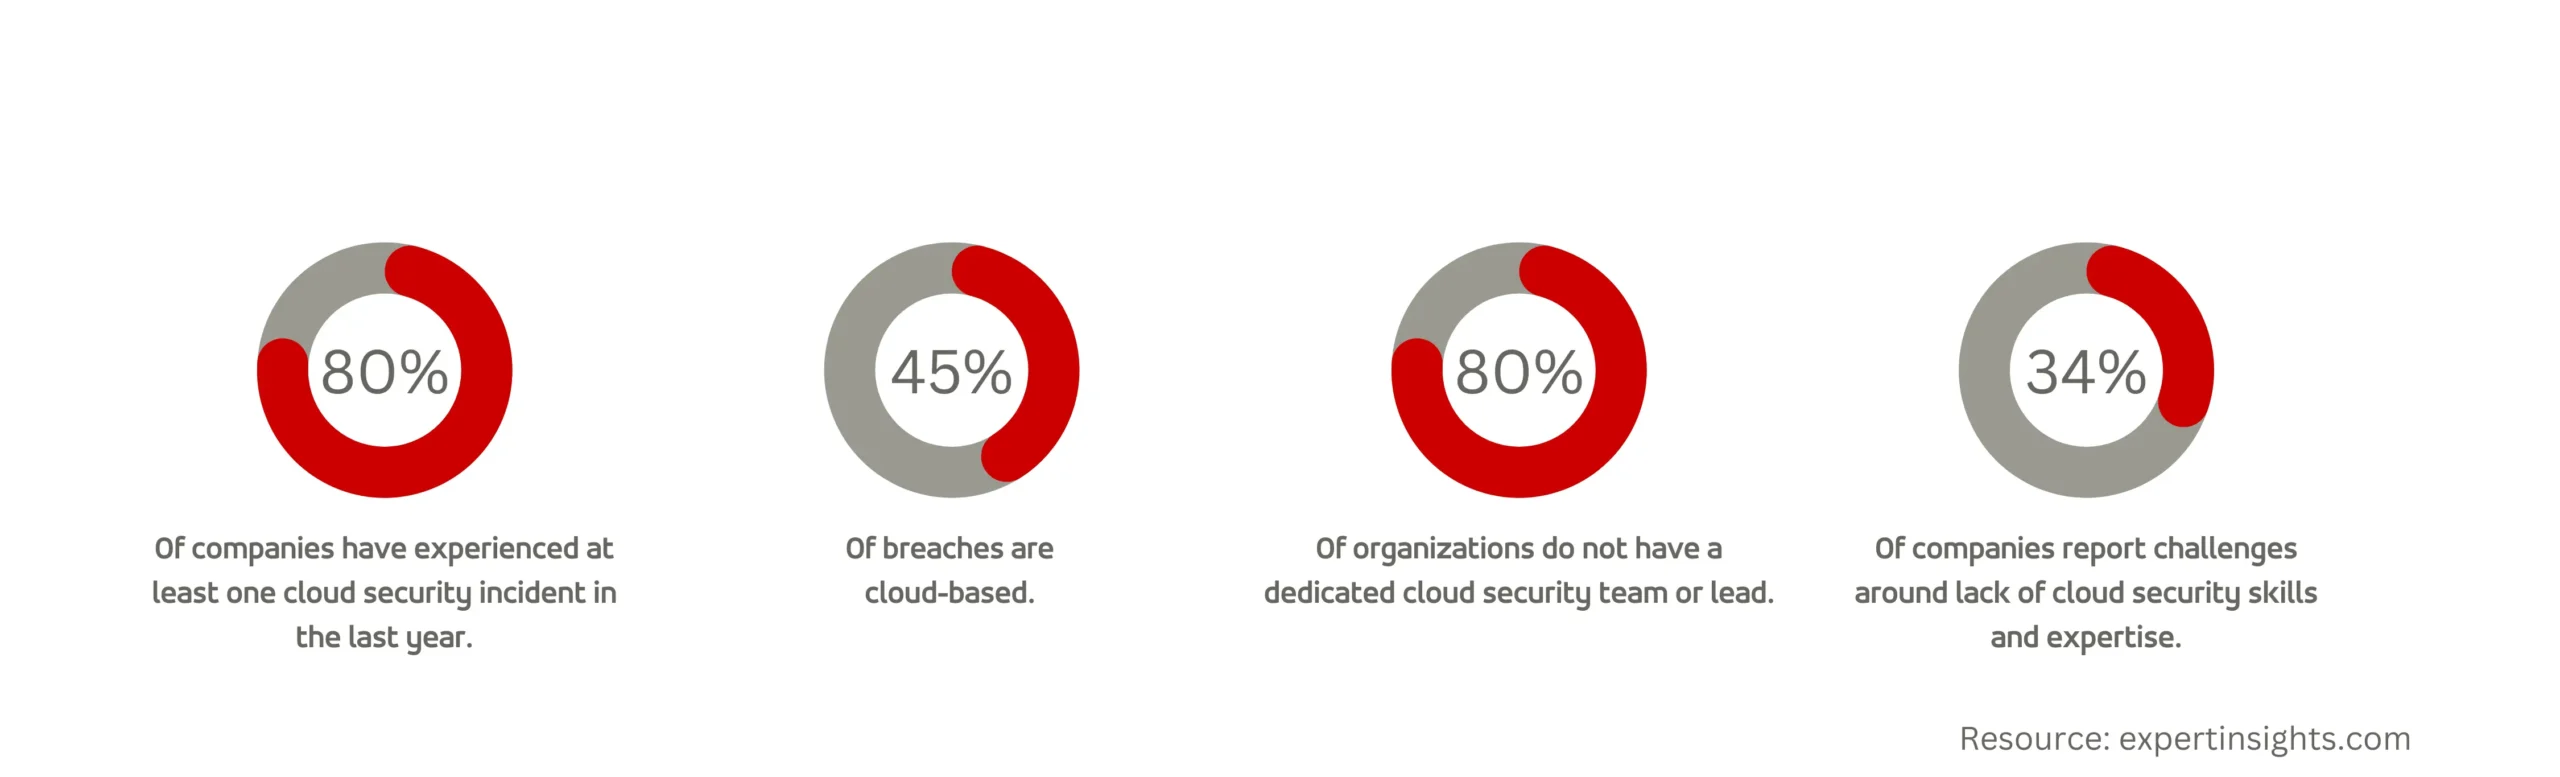 Cloud Security Statistics